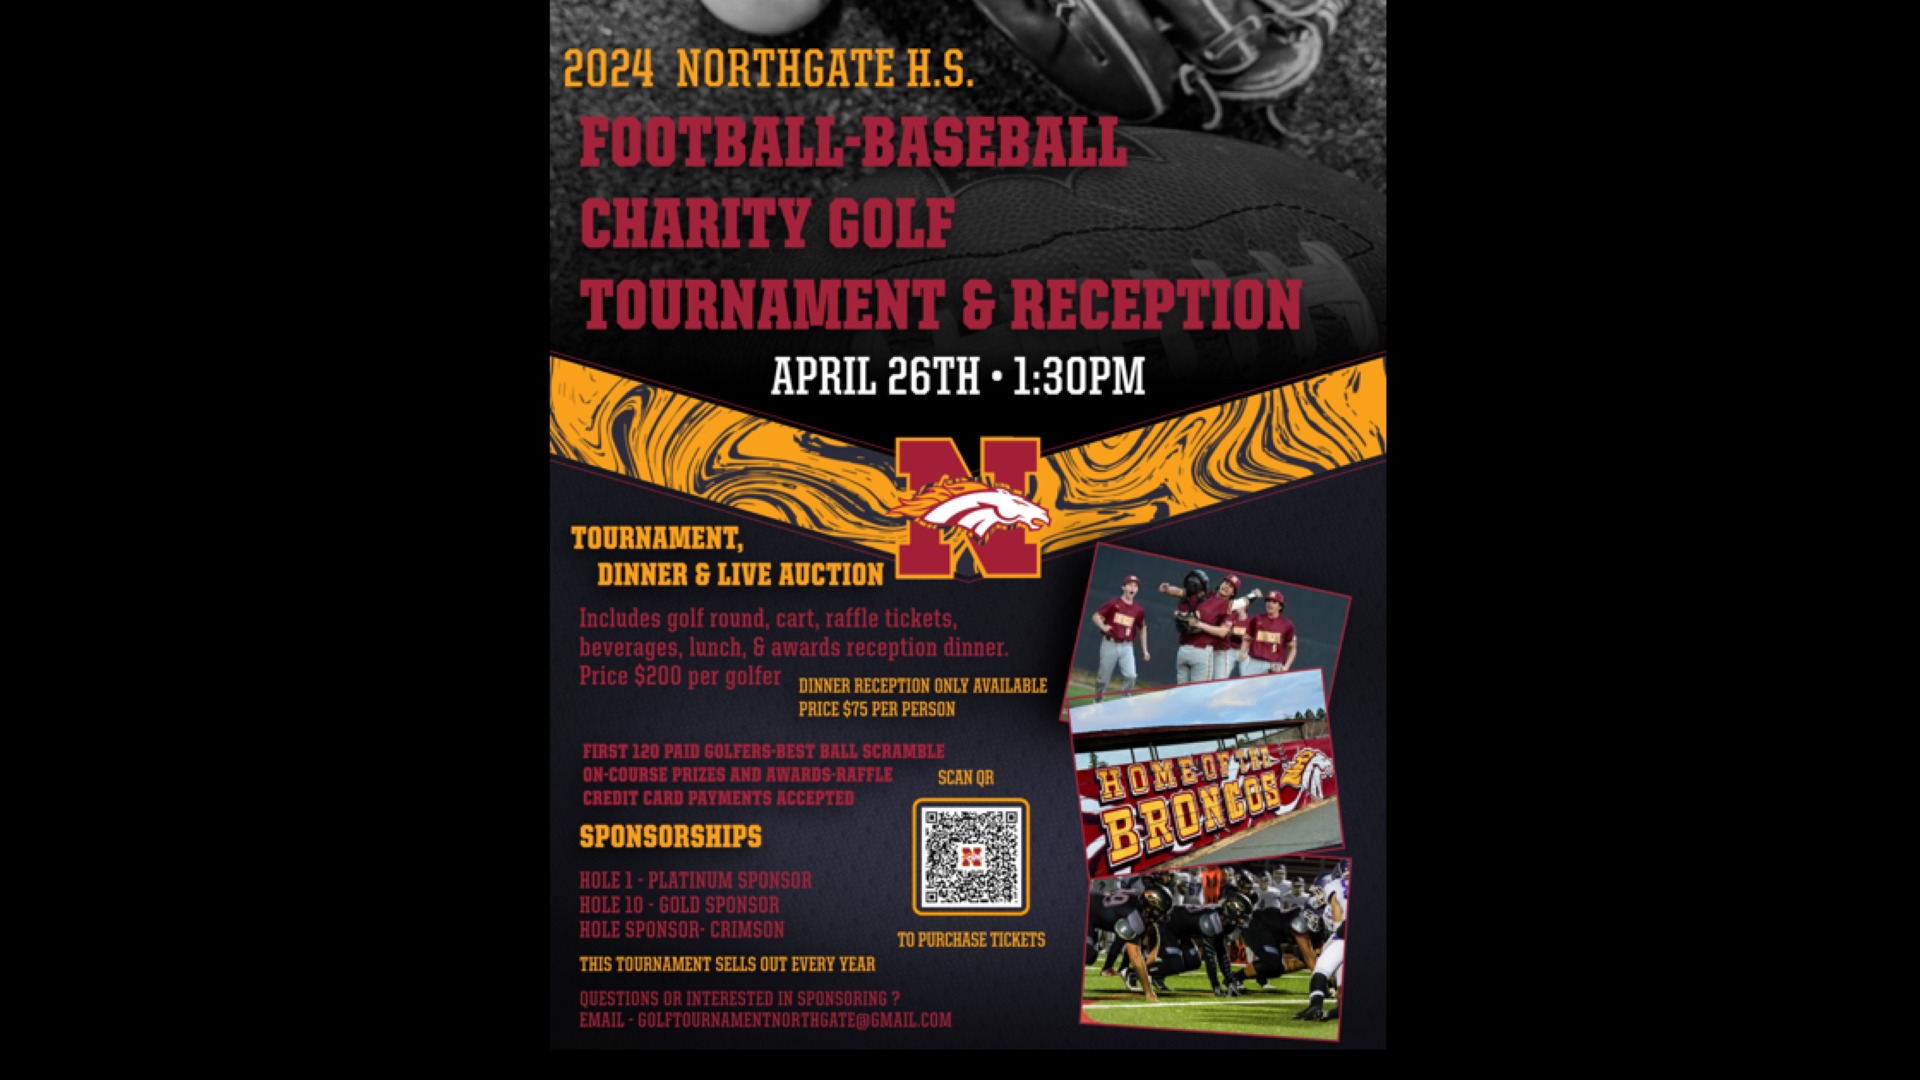 Northgate Slide 7 - 2024 Football-Baseball Charity Golf Tournament